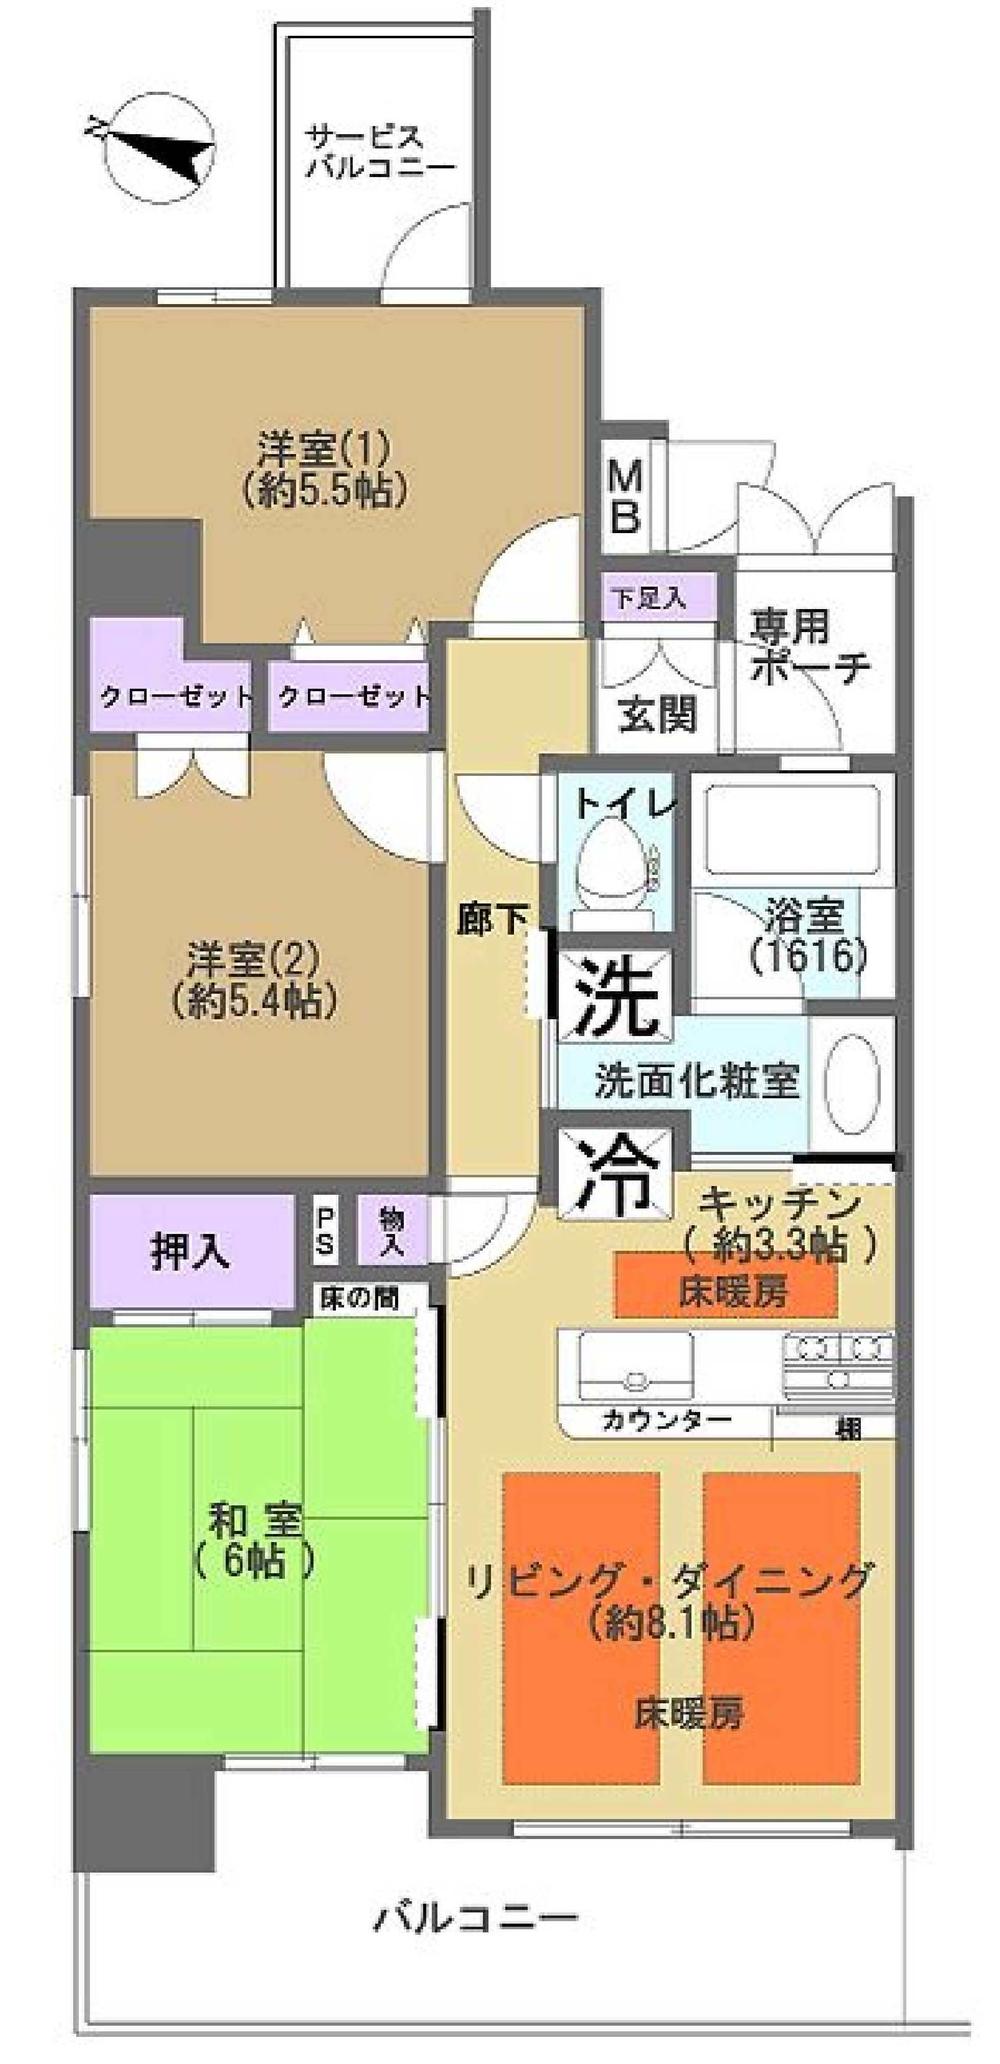 Floor plan. 3LDK, Price 30,800,000 yen, Footprint 64.5 sq m , Balcony area 9.93 sq m